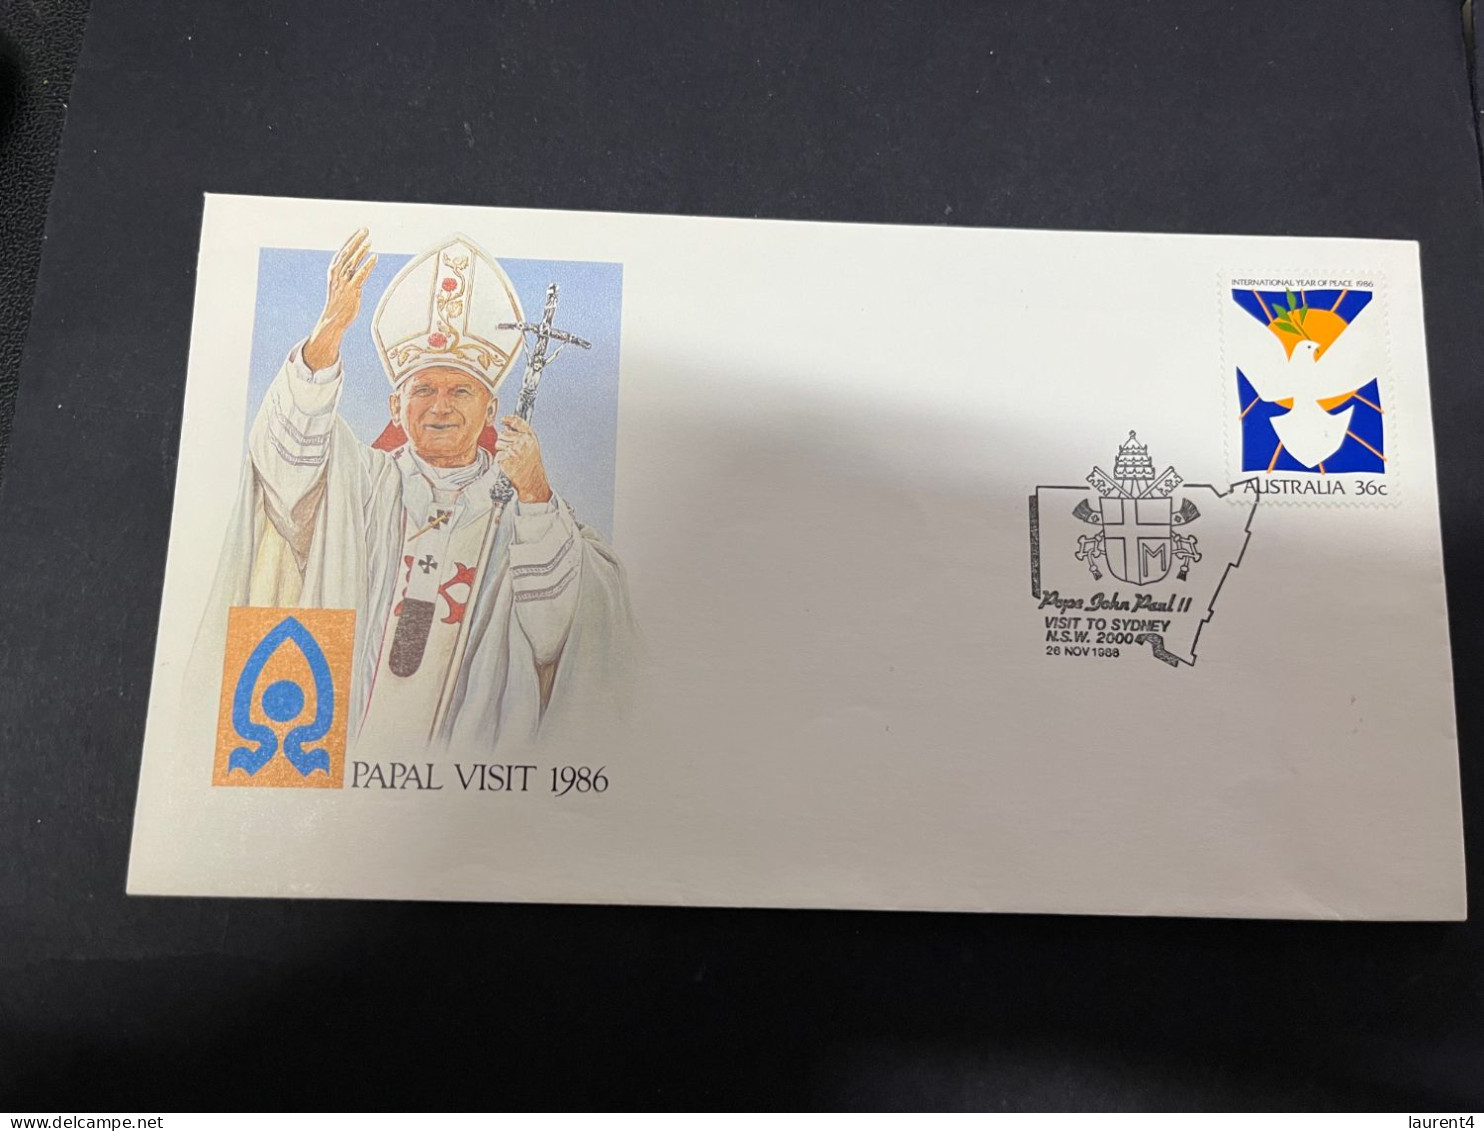 22-4-2024 (2 Z 42) Australia FDC - 1986 - Pope John Paul II Visit To Australia (Sydney P/m) 26-11-1986 - Christentum